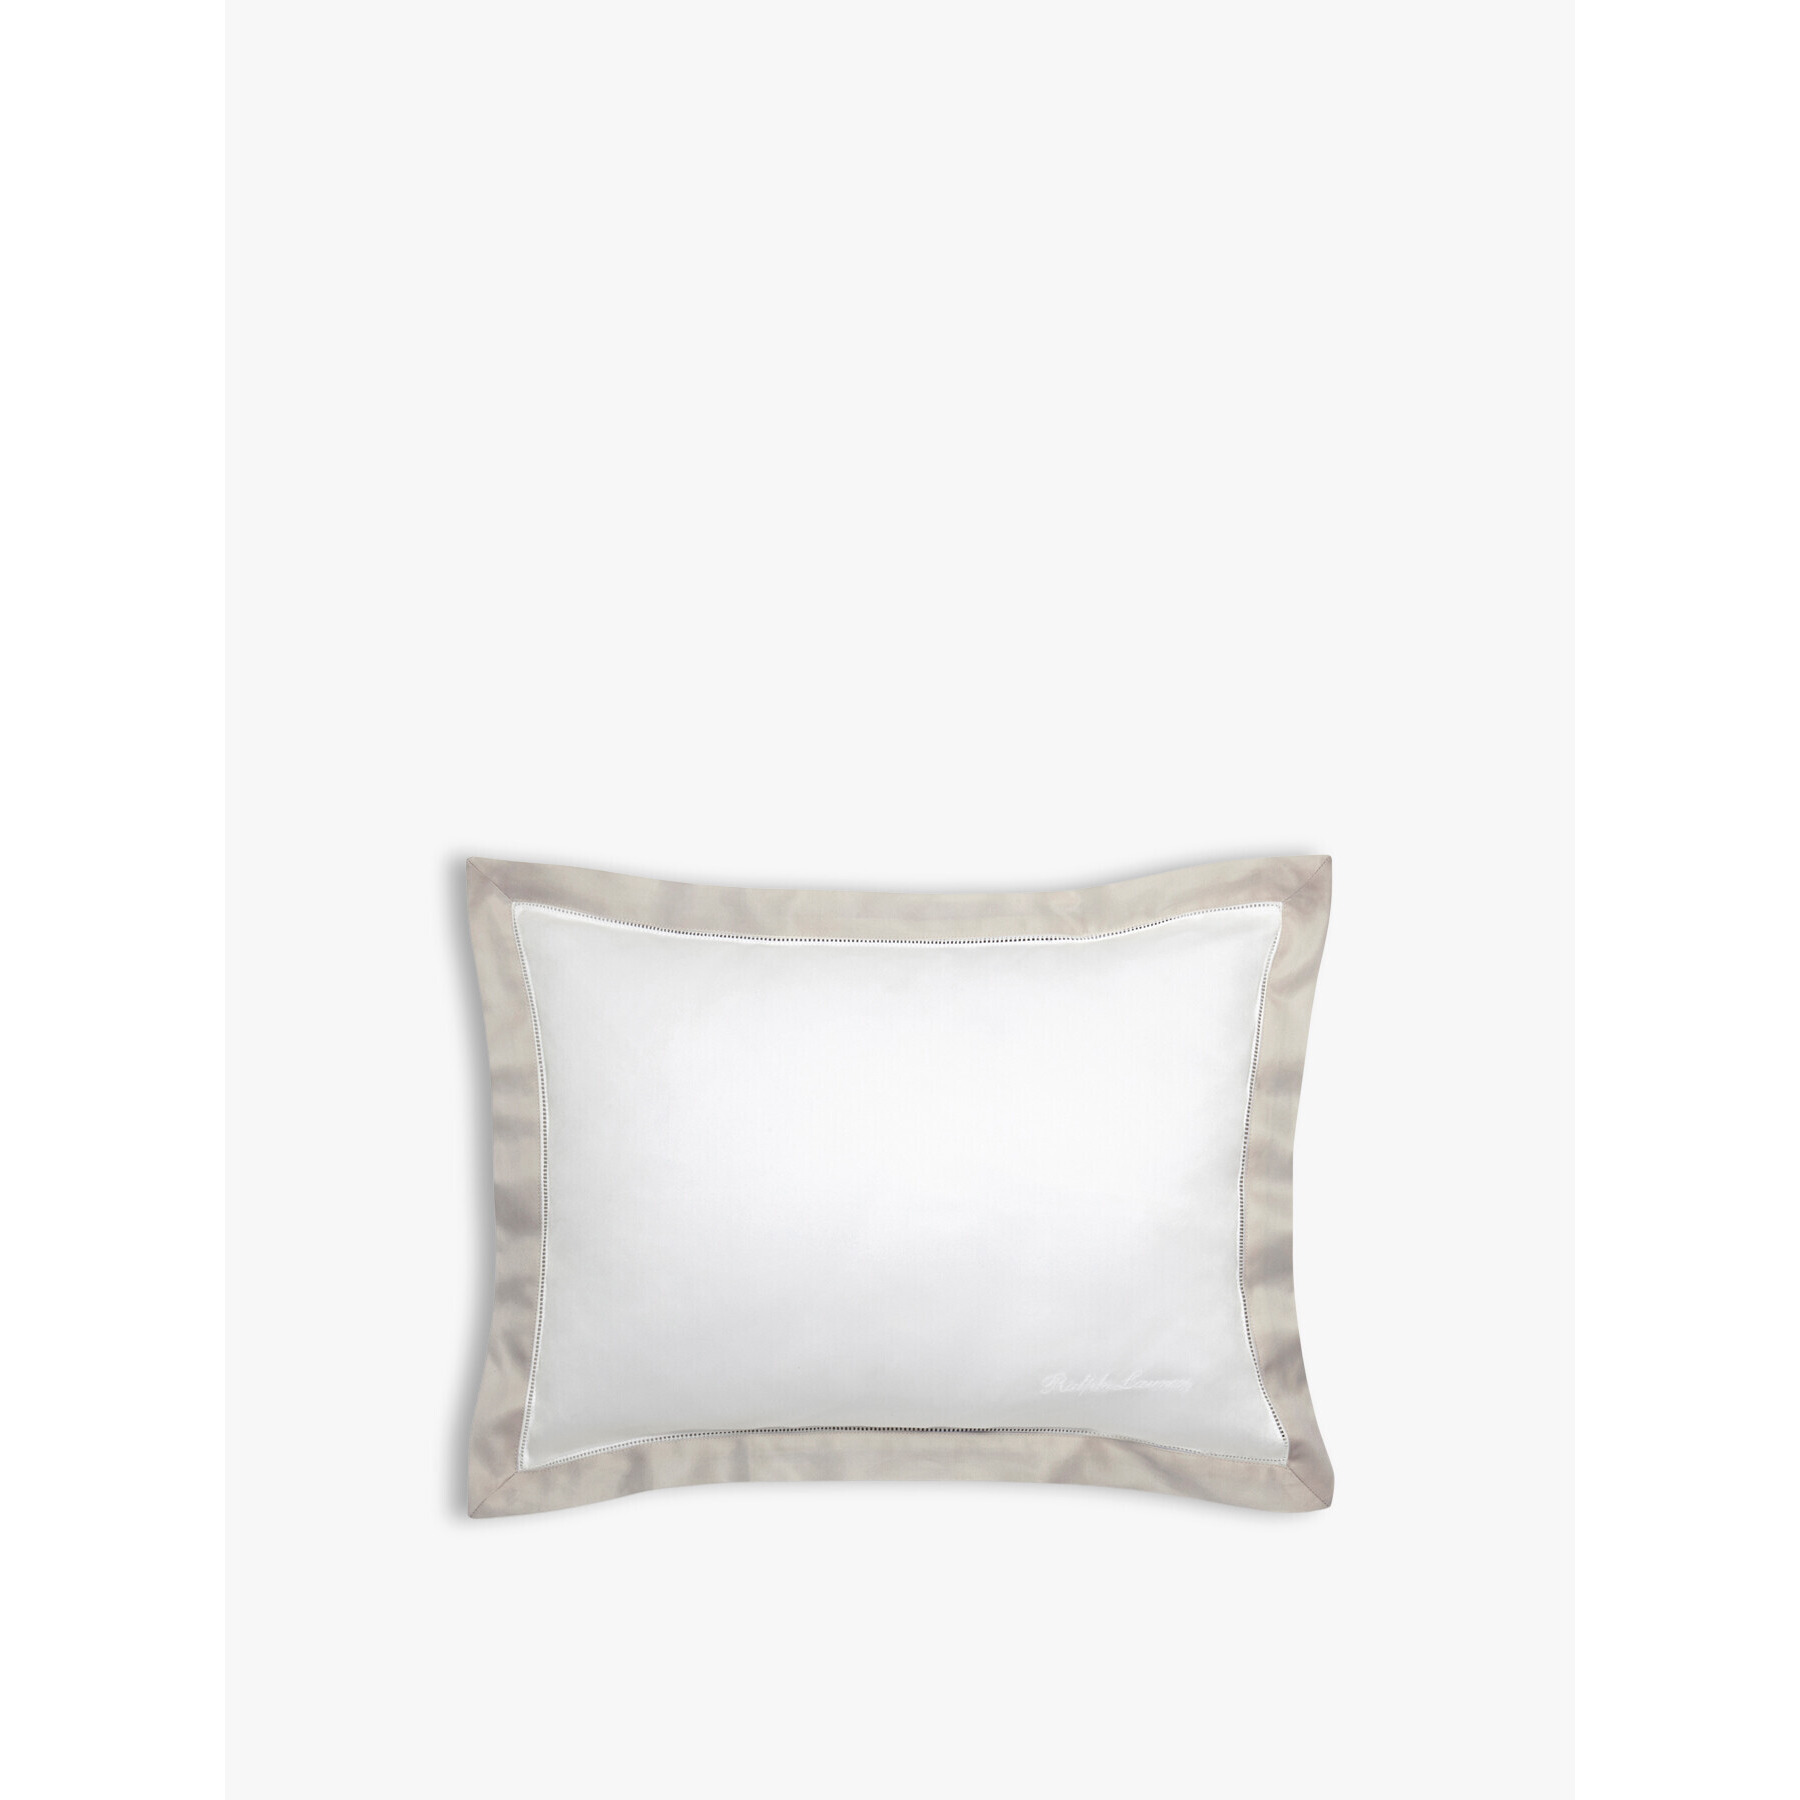 Ralph Lauren Home Langdon Cushion Cover - Size 30x40cm Silver - image 1